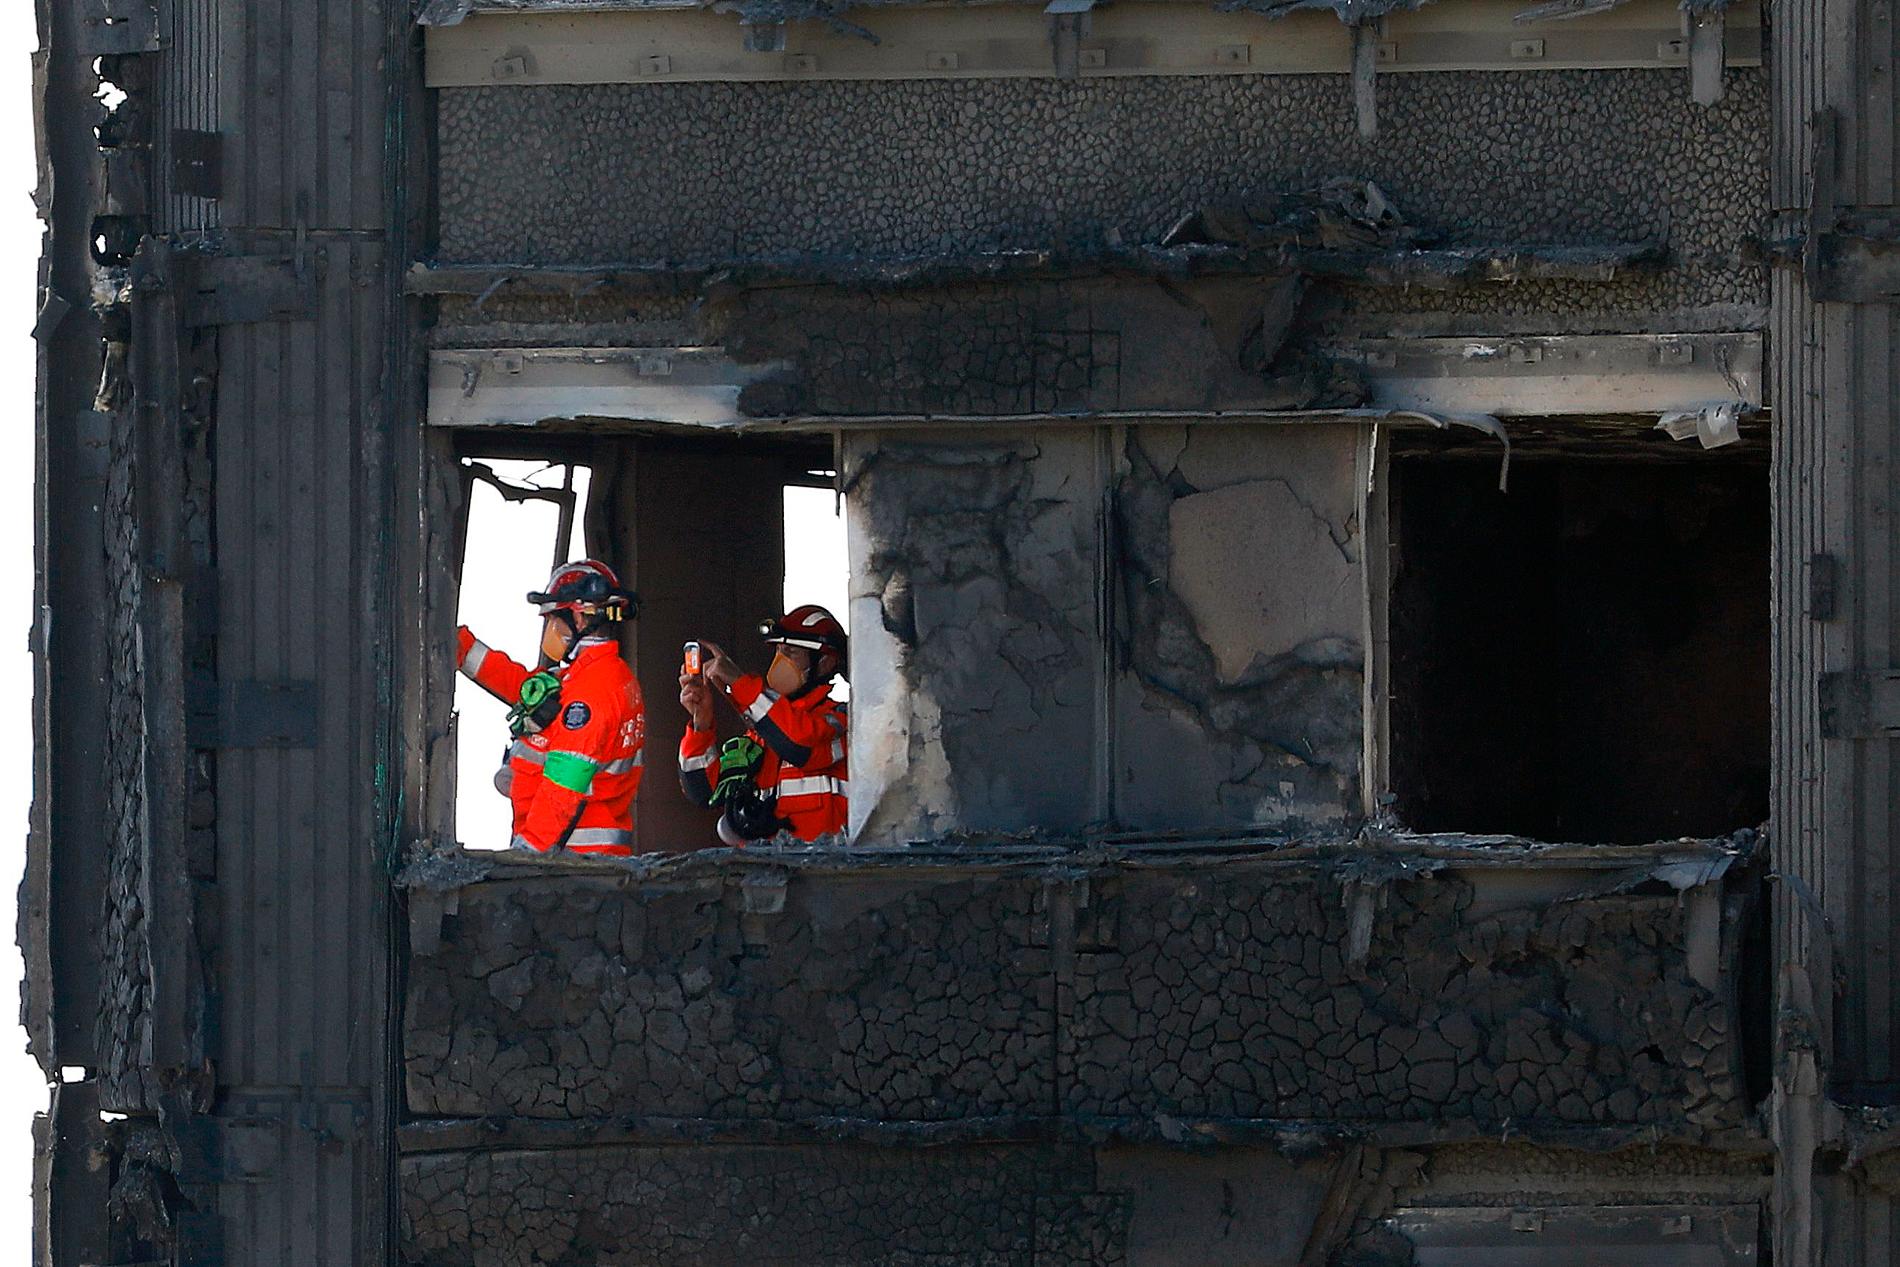 ”Search and Rescue” personal söker igenom Grenfell Tower efter branden.